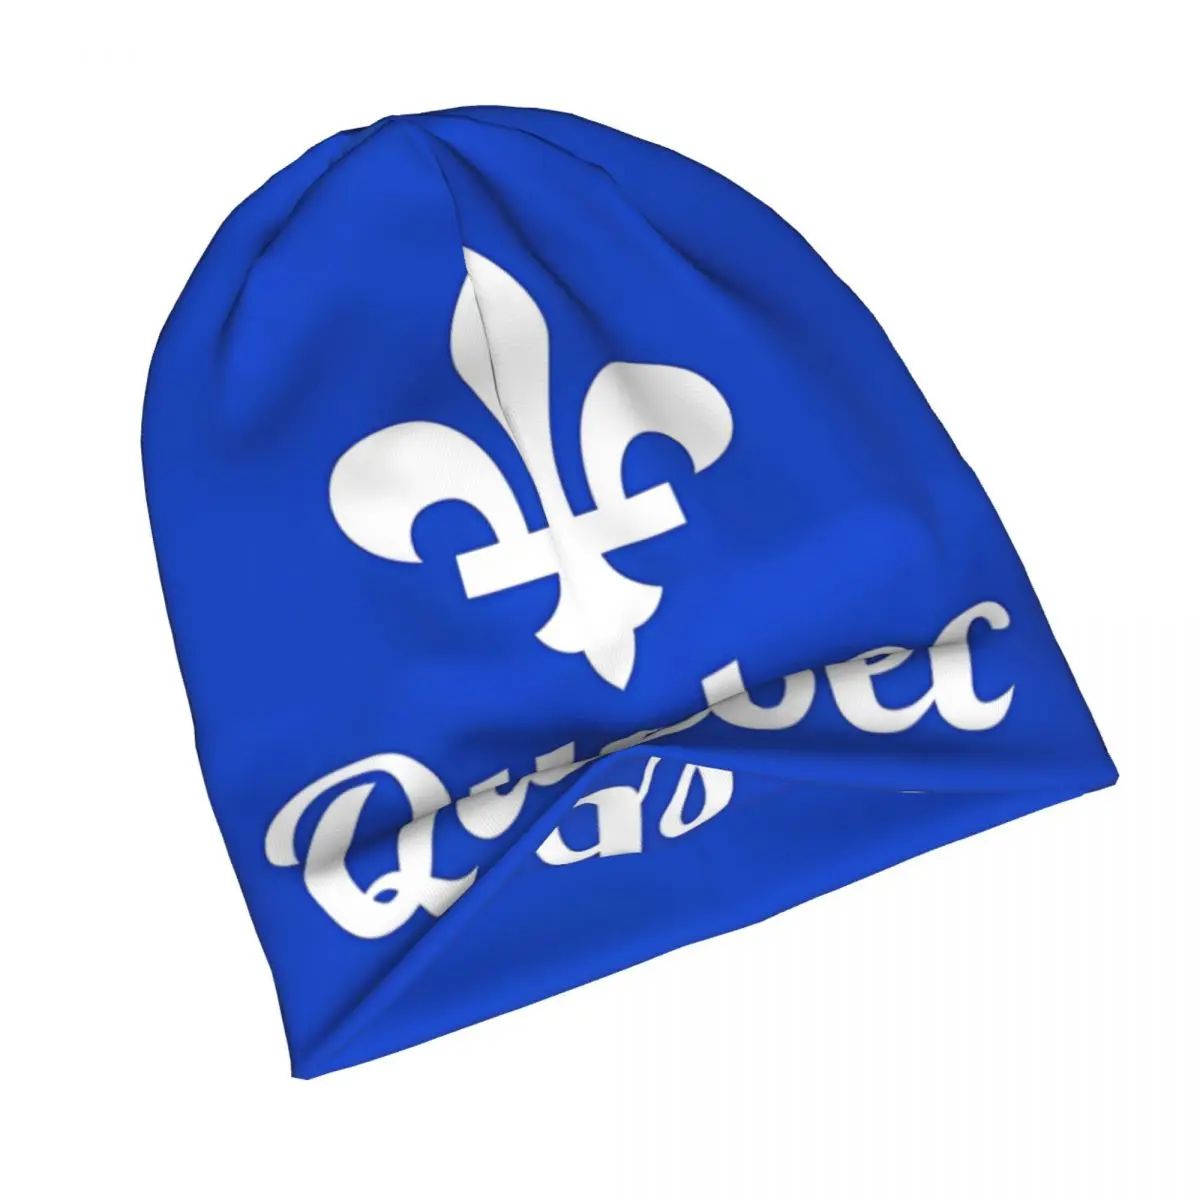 Quebec Deporte Blanco Gorro De Tapas De Fleur De Lys Skullies Gorros De Esquí De Tapas Del Capó Homme Sombreros . ' - ' . 2